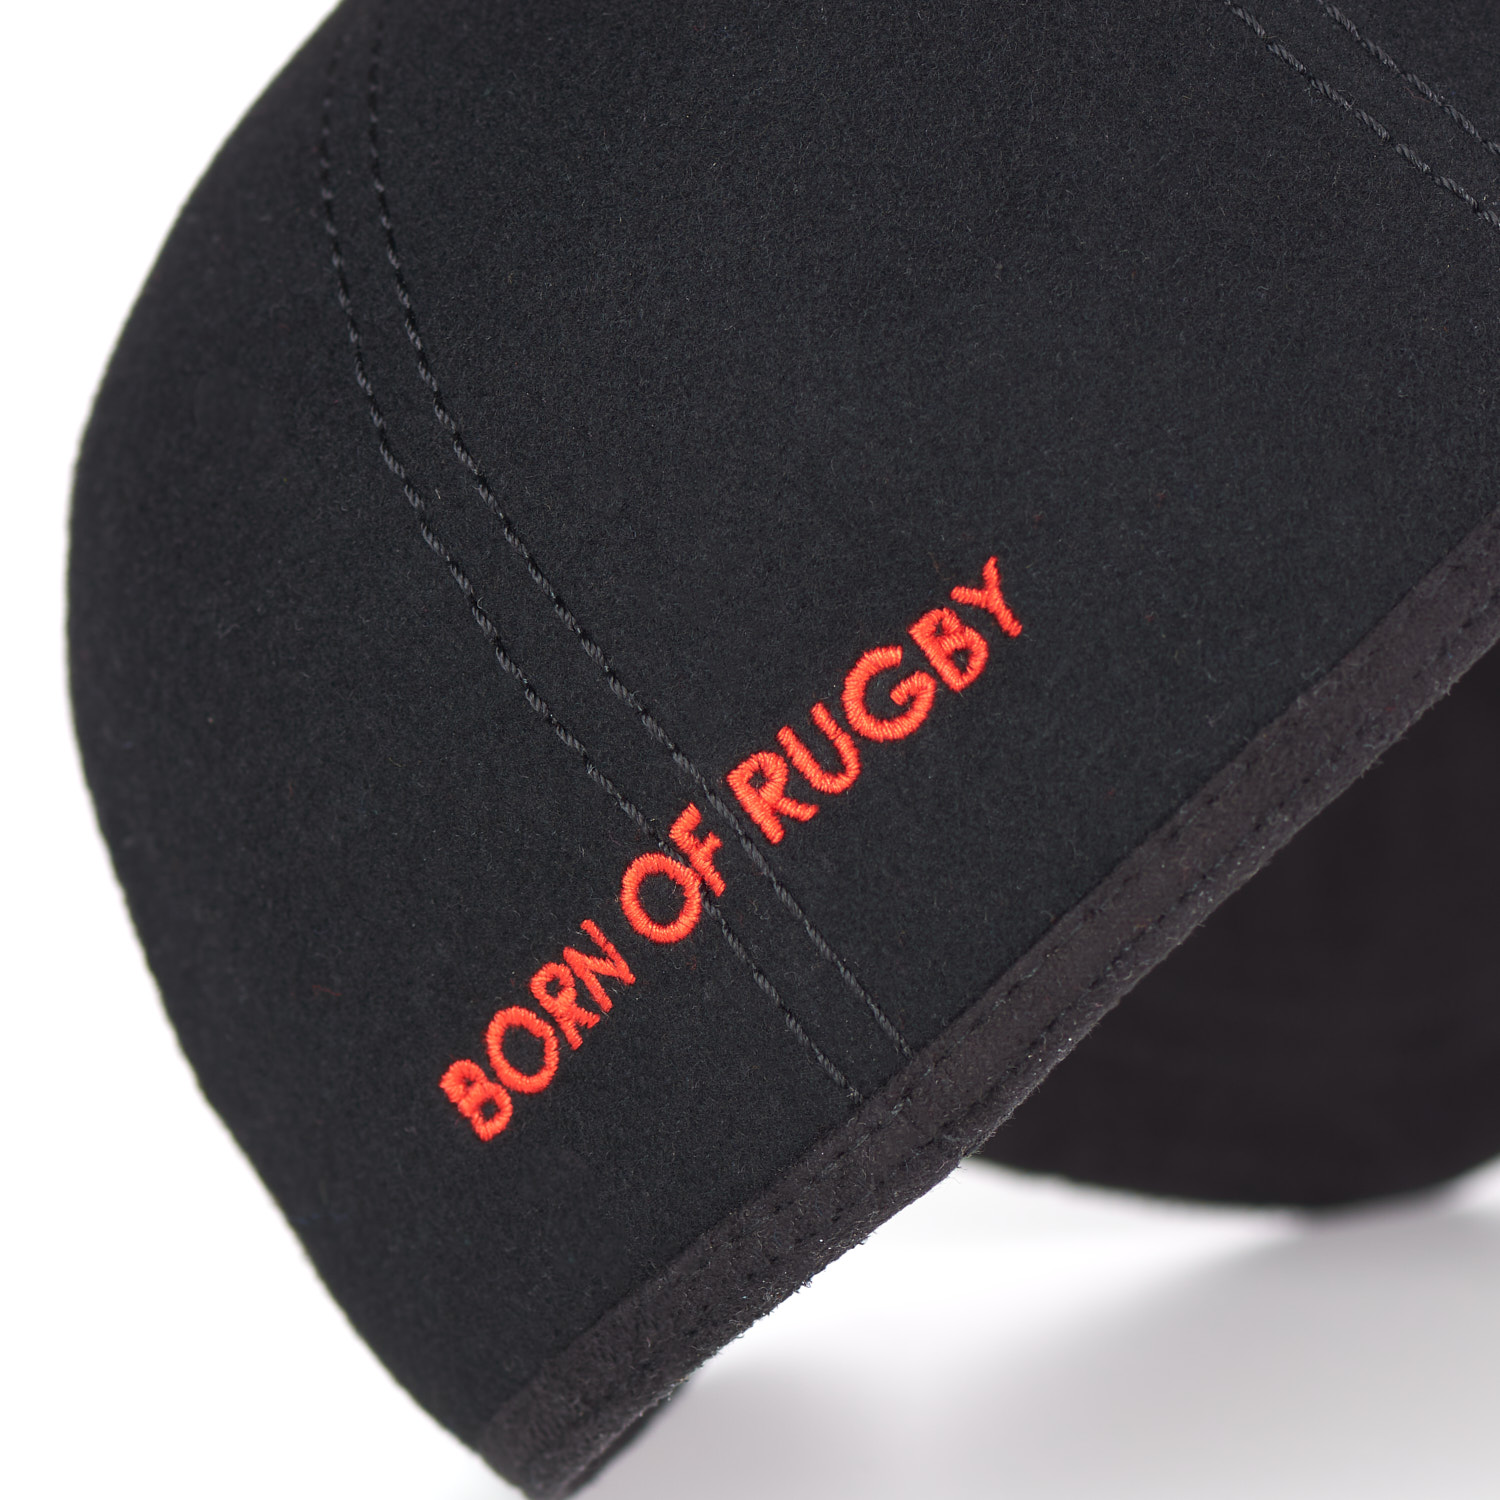 British Ball Cap Black product image - back